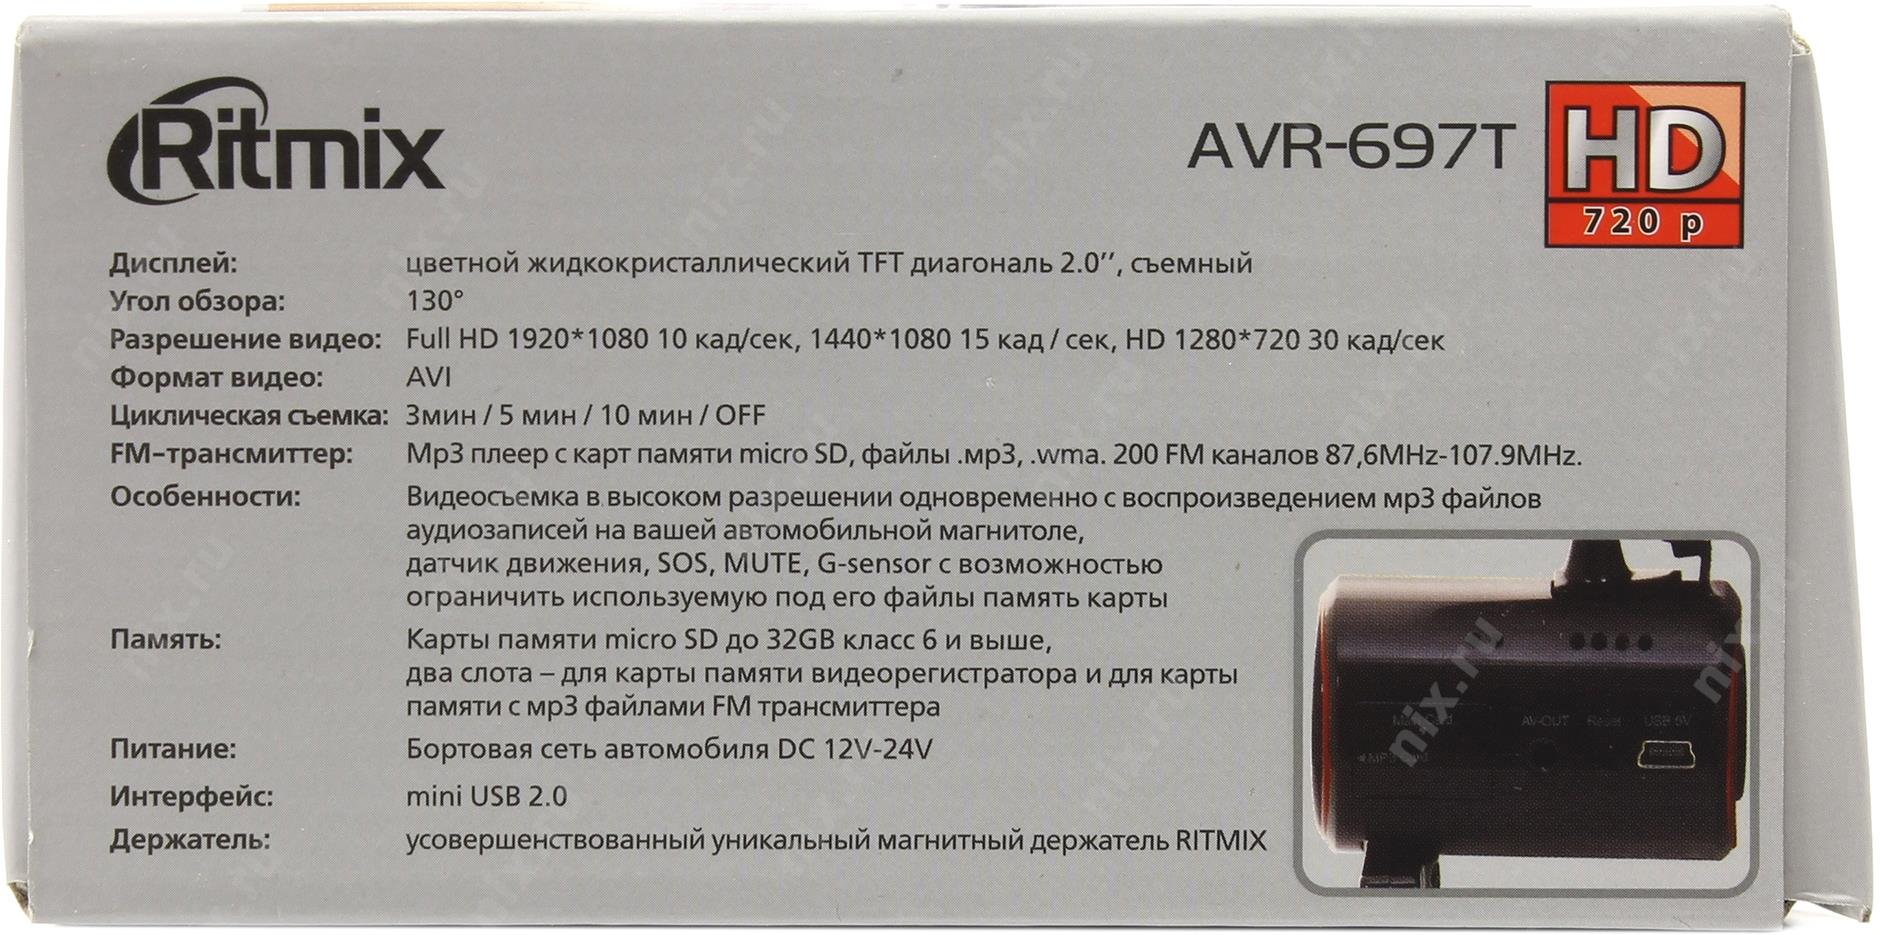 Ritmix AVR 697t где купить батарею